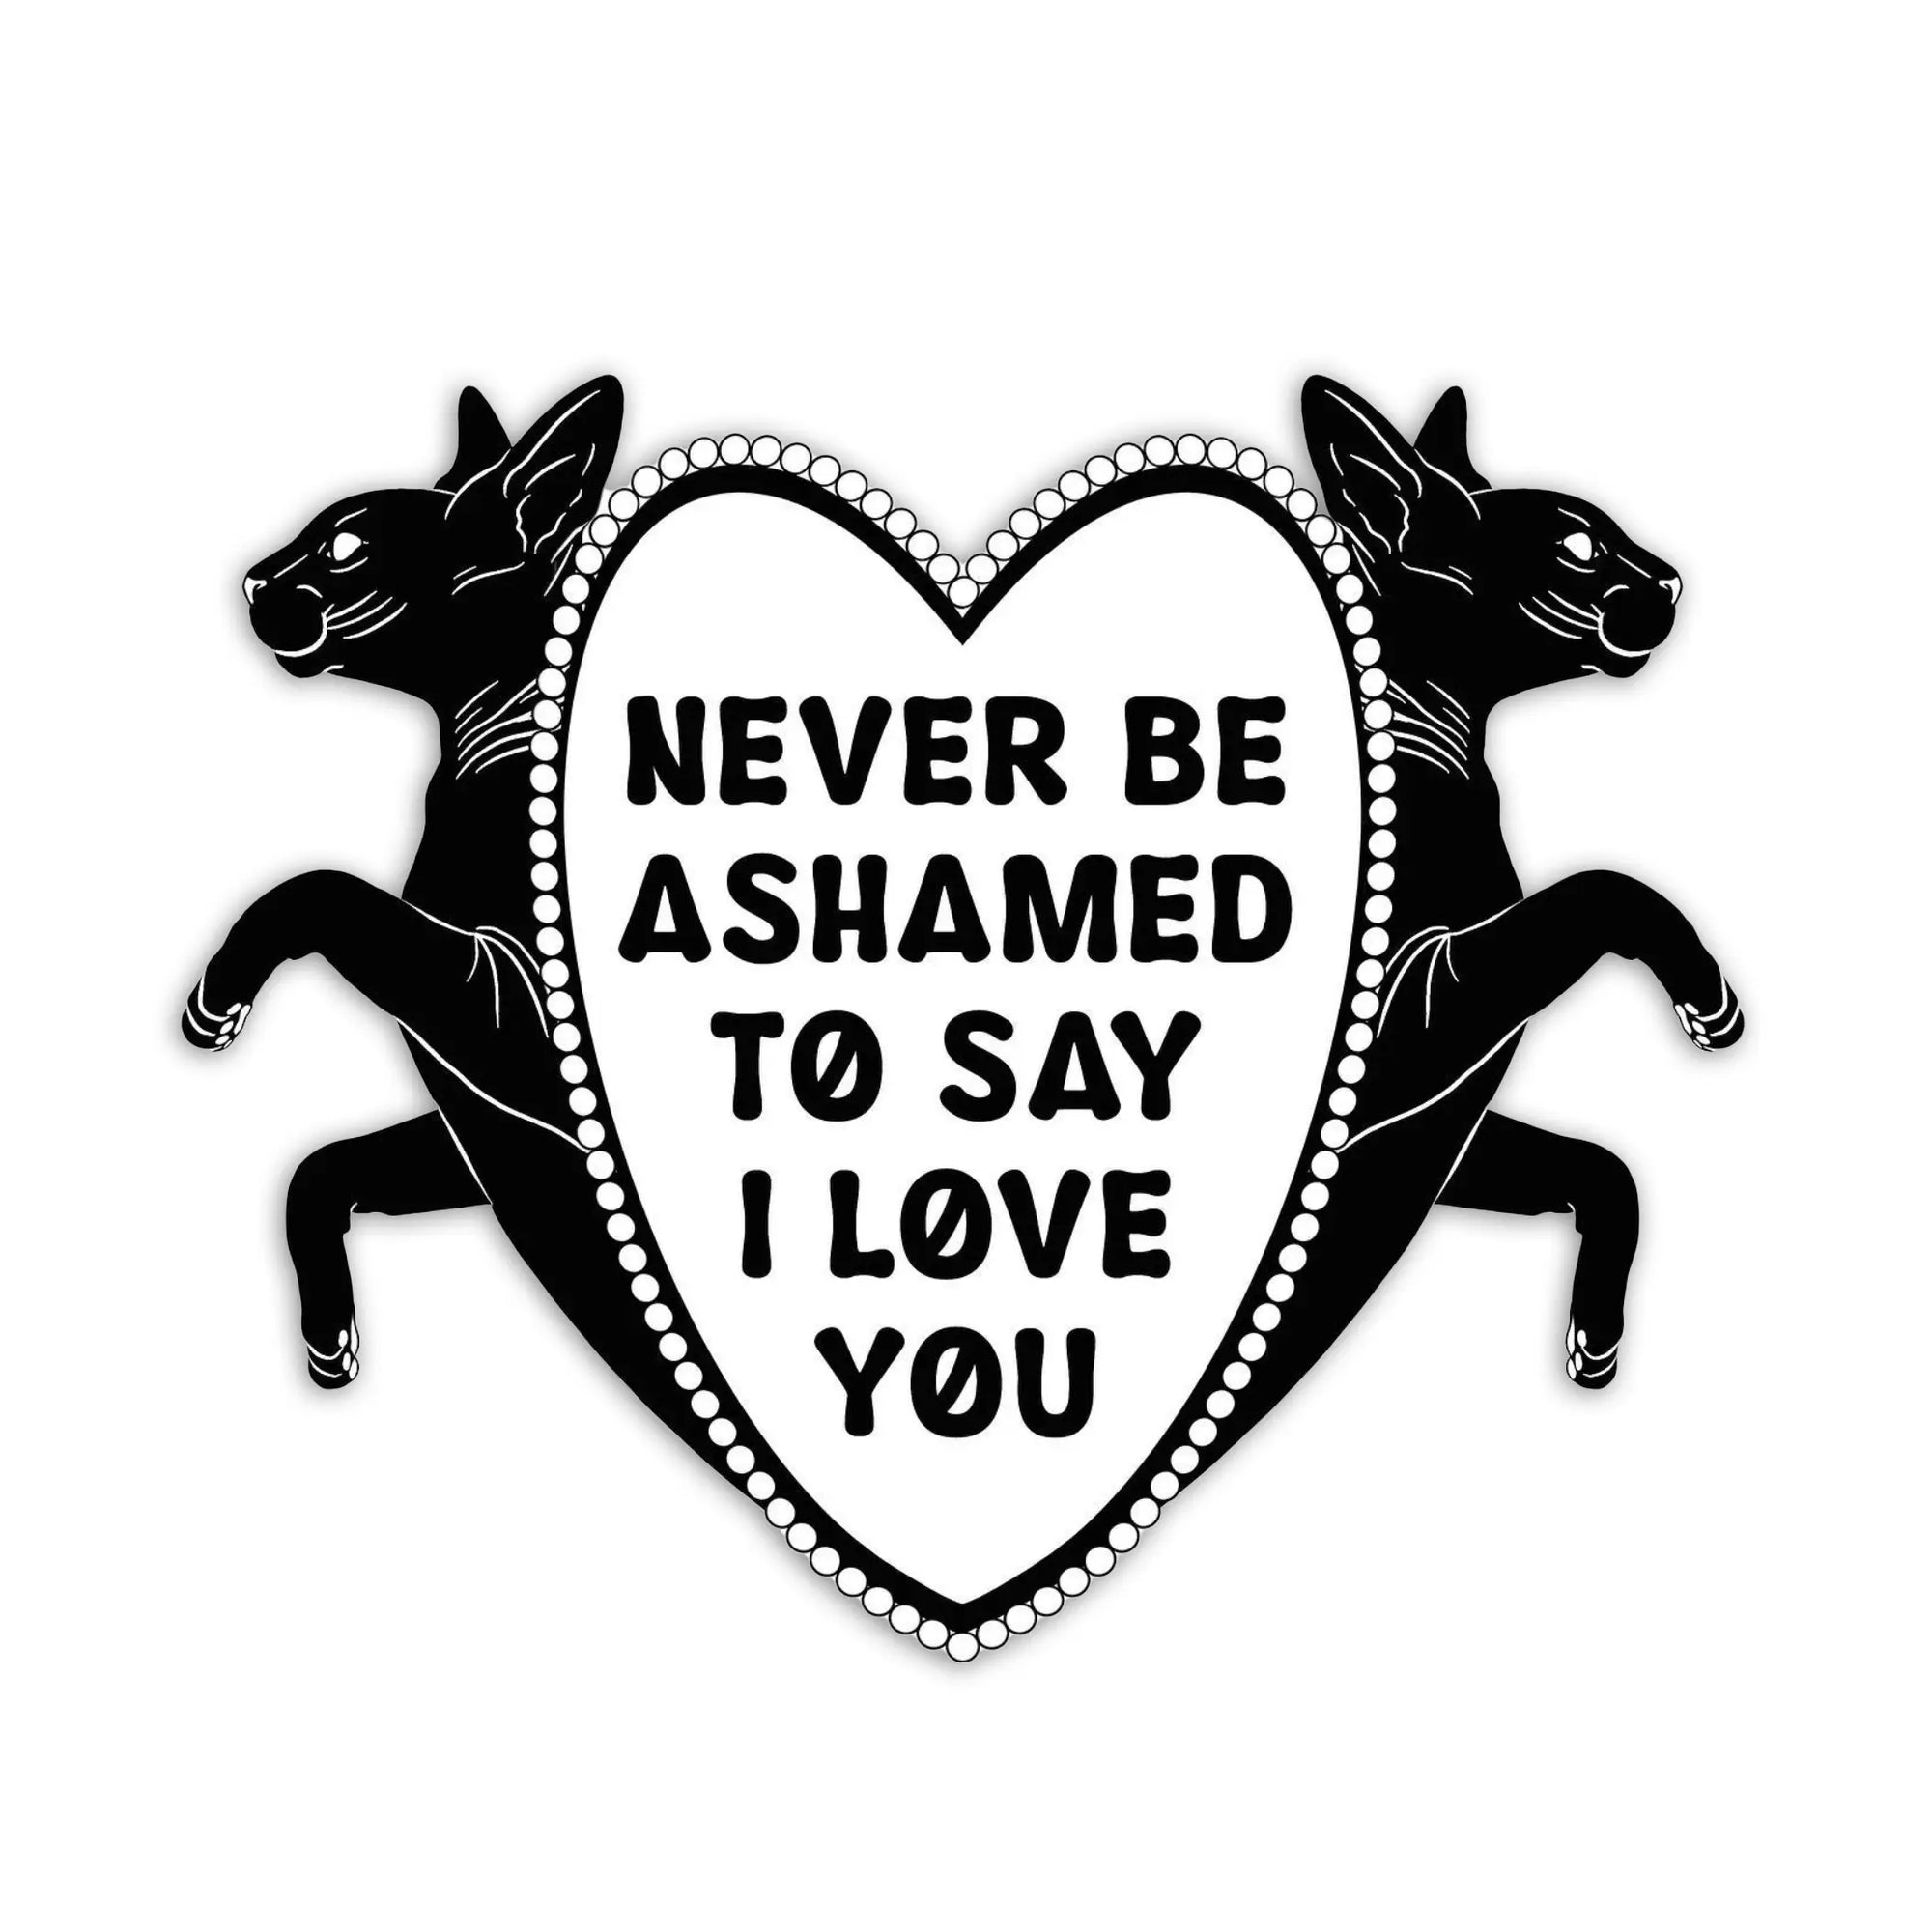 Never Be Ashamed To Say I Love You - Vinyl Sticker